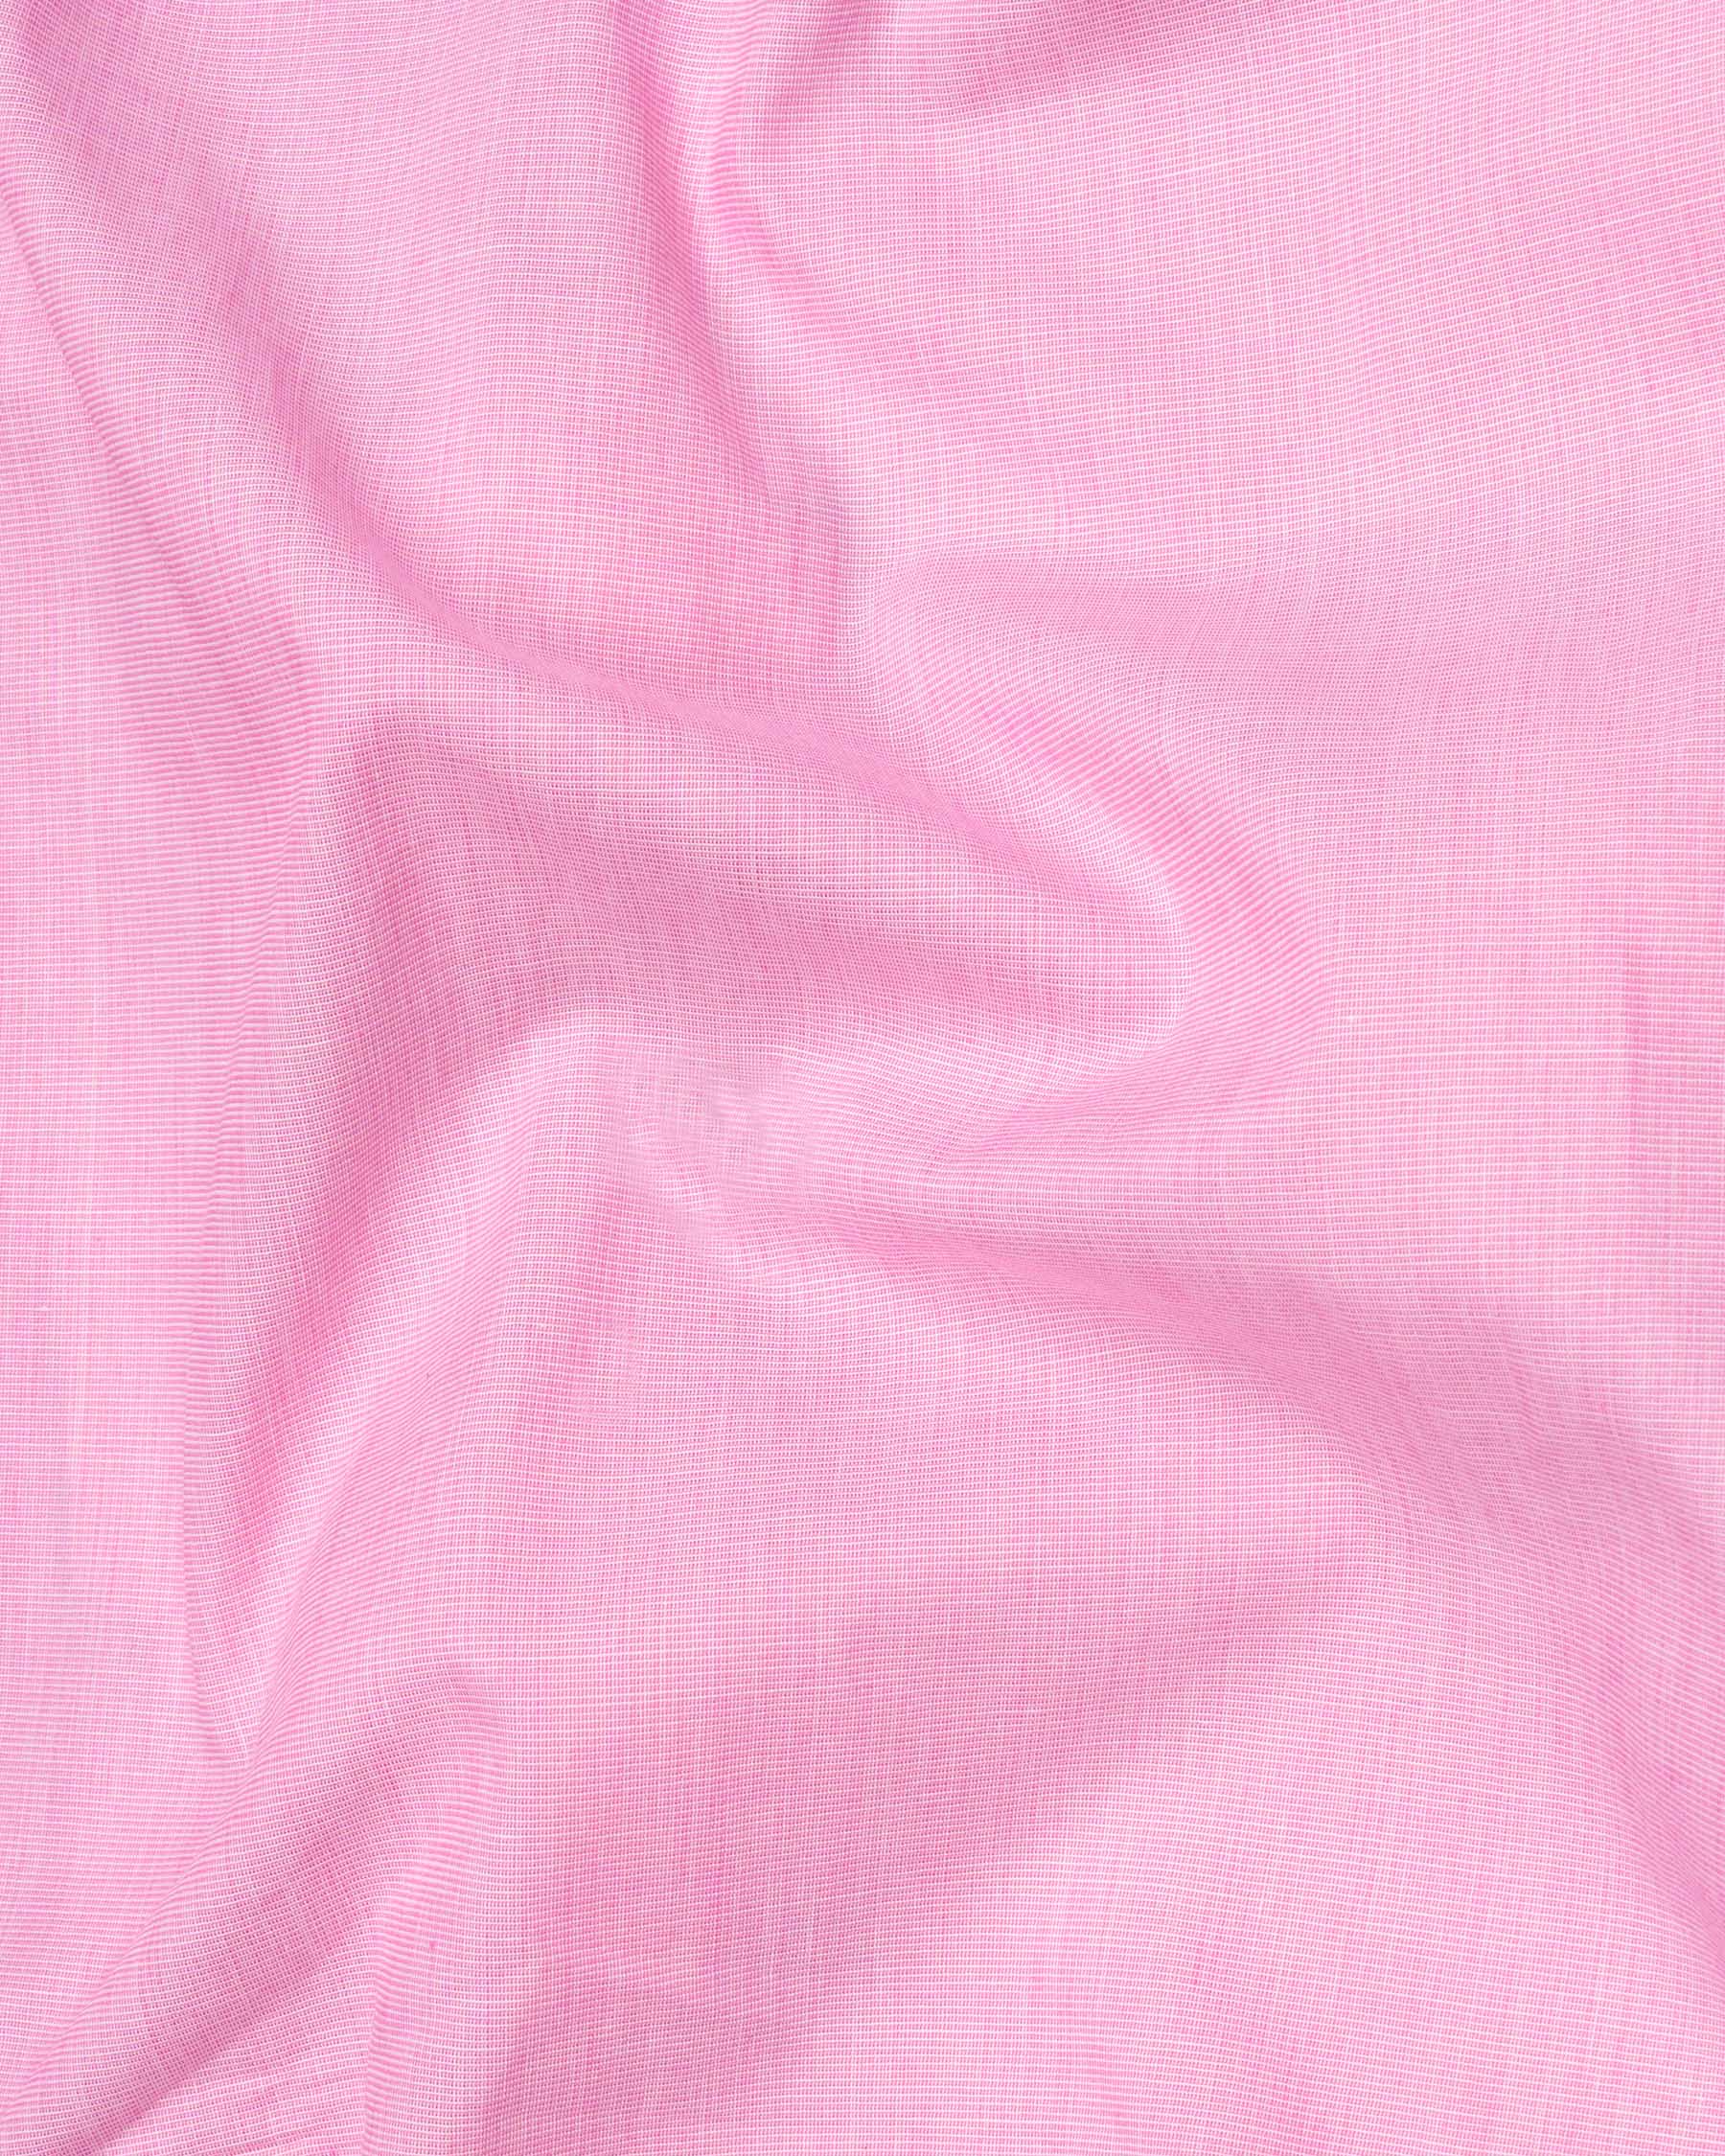 Cupid Yonder Pink Chambray Premium Cotton Shirt 6129-CP-38, 6129-CP-H-38, 6129-CP-39, 6129-CP-H-39, 6129-CP-40, 6129-CP-H-40, 6129-CP-42, 6129-CP-H-42, 6129-CP-44, 6129-CP-H-44, 6129-CP-46, 6129-CP-H-46, 6129-CP-48, 6129-CP-H-48, 6129-CP-50, 6129-CP-H-50, 6129-CP-52, 6129-CP-H-52